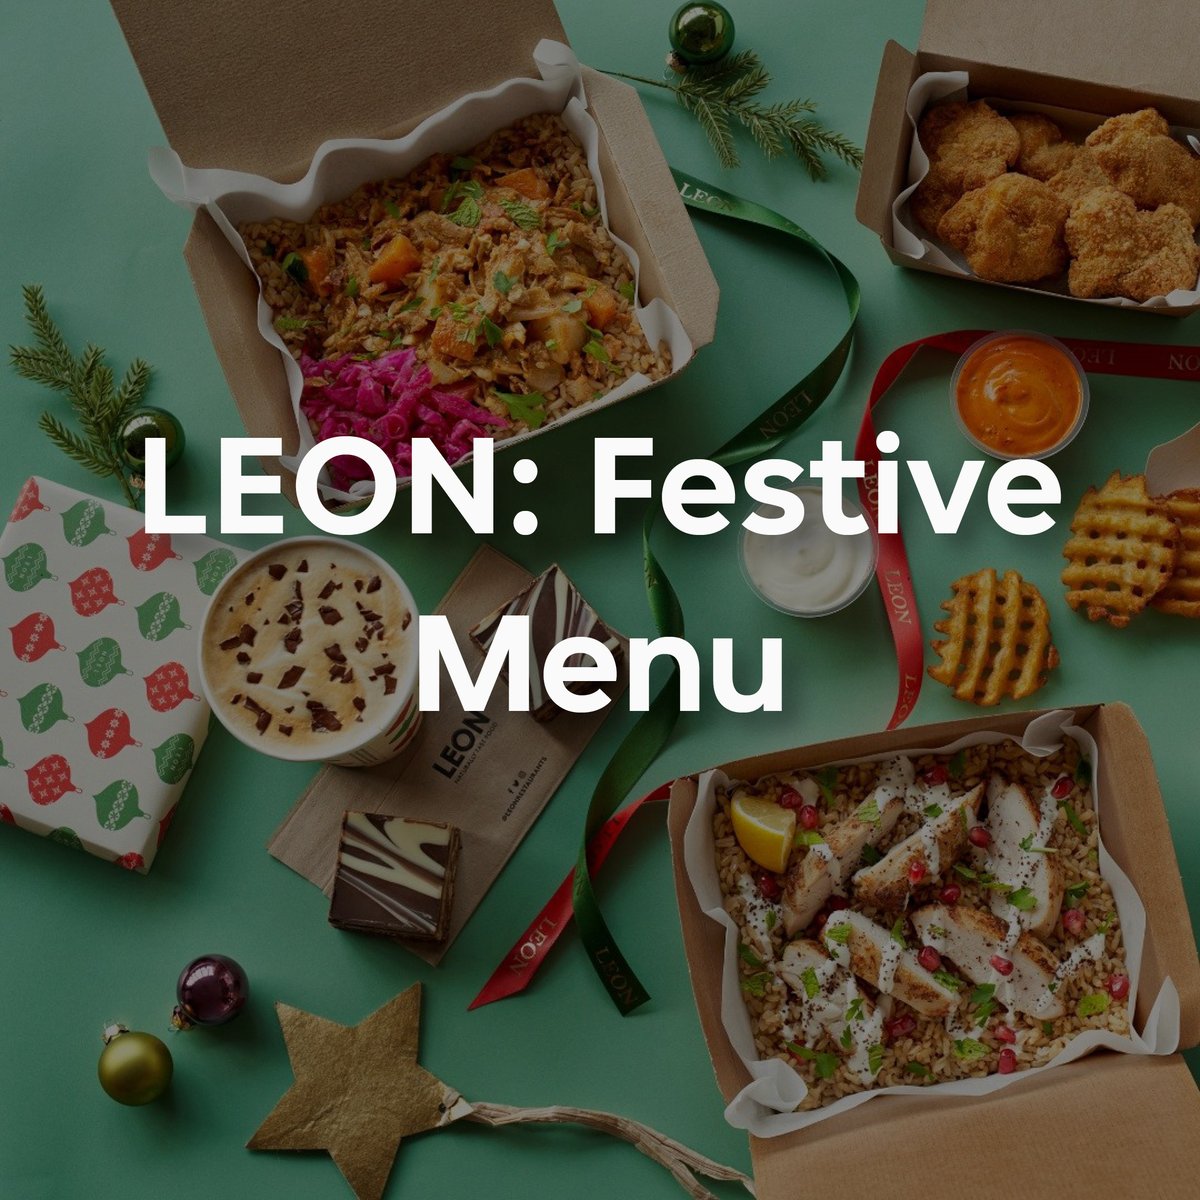 leon festive menu email 